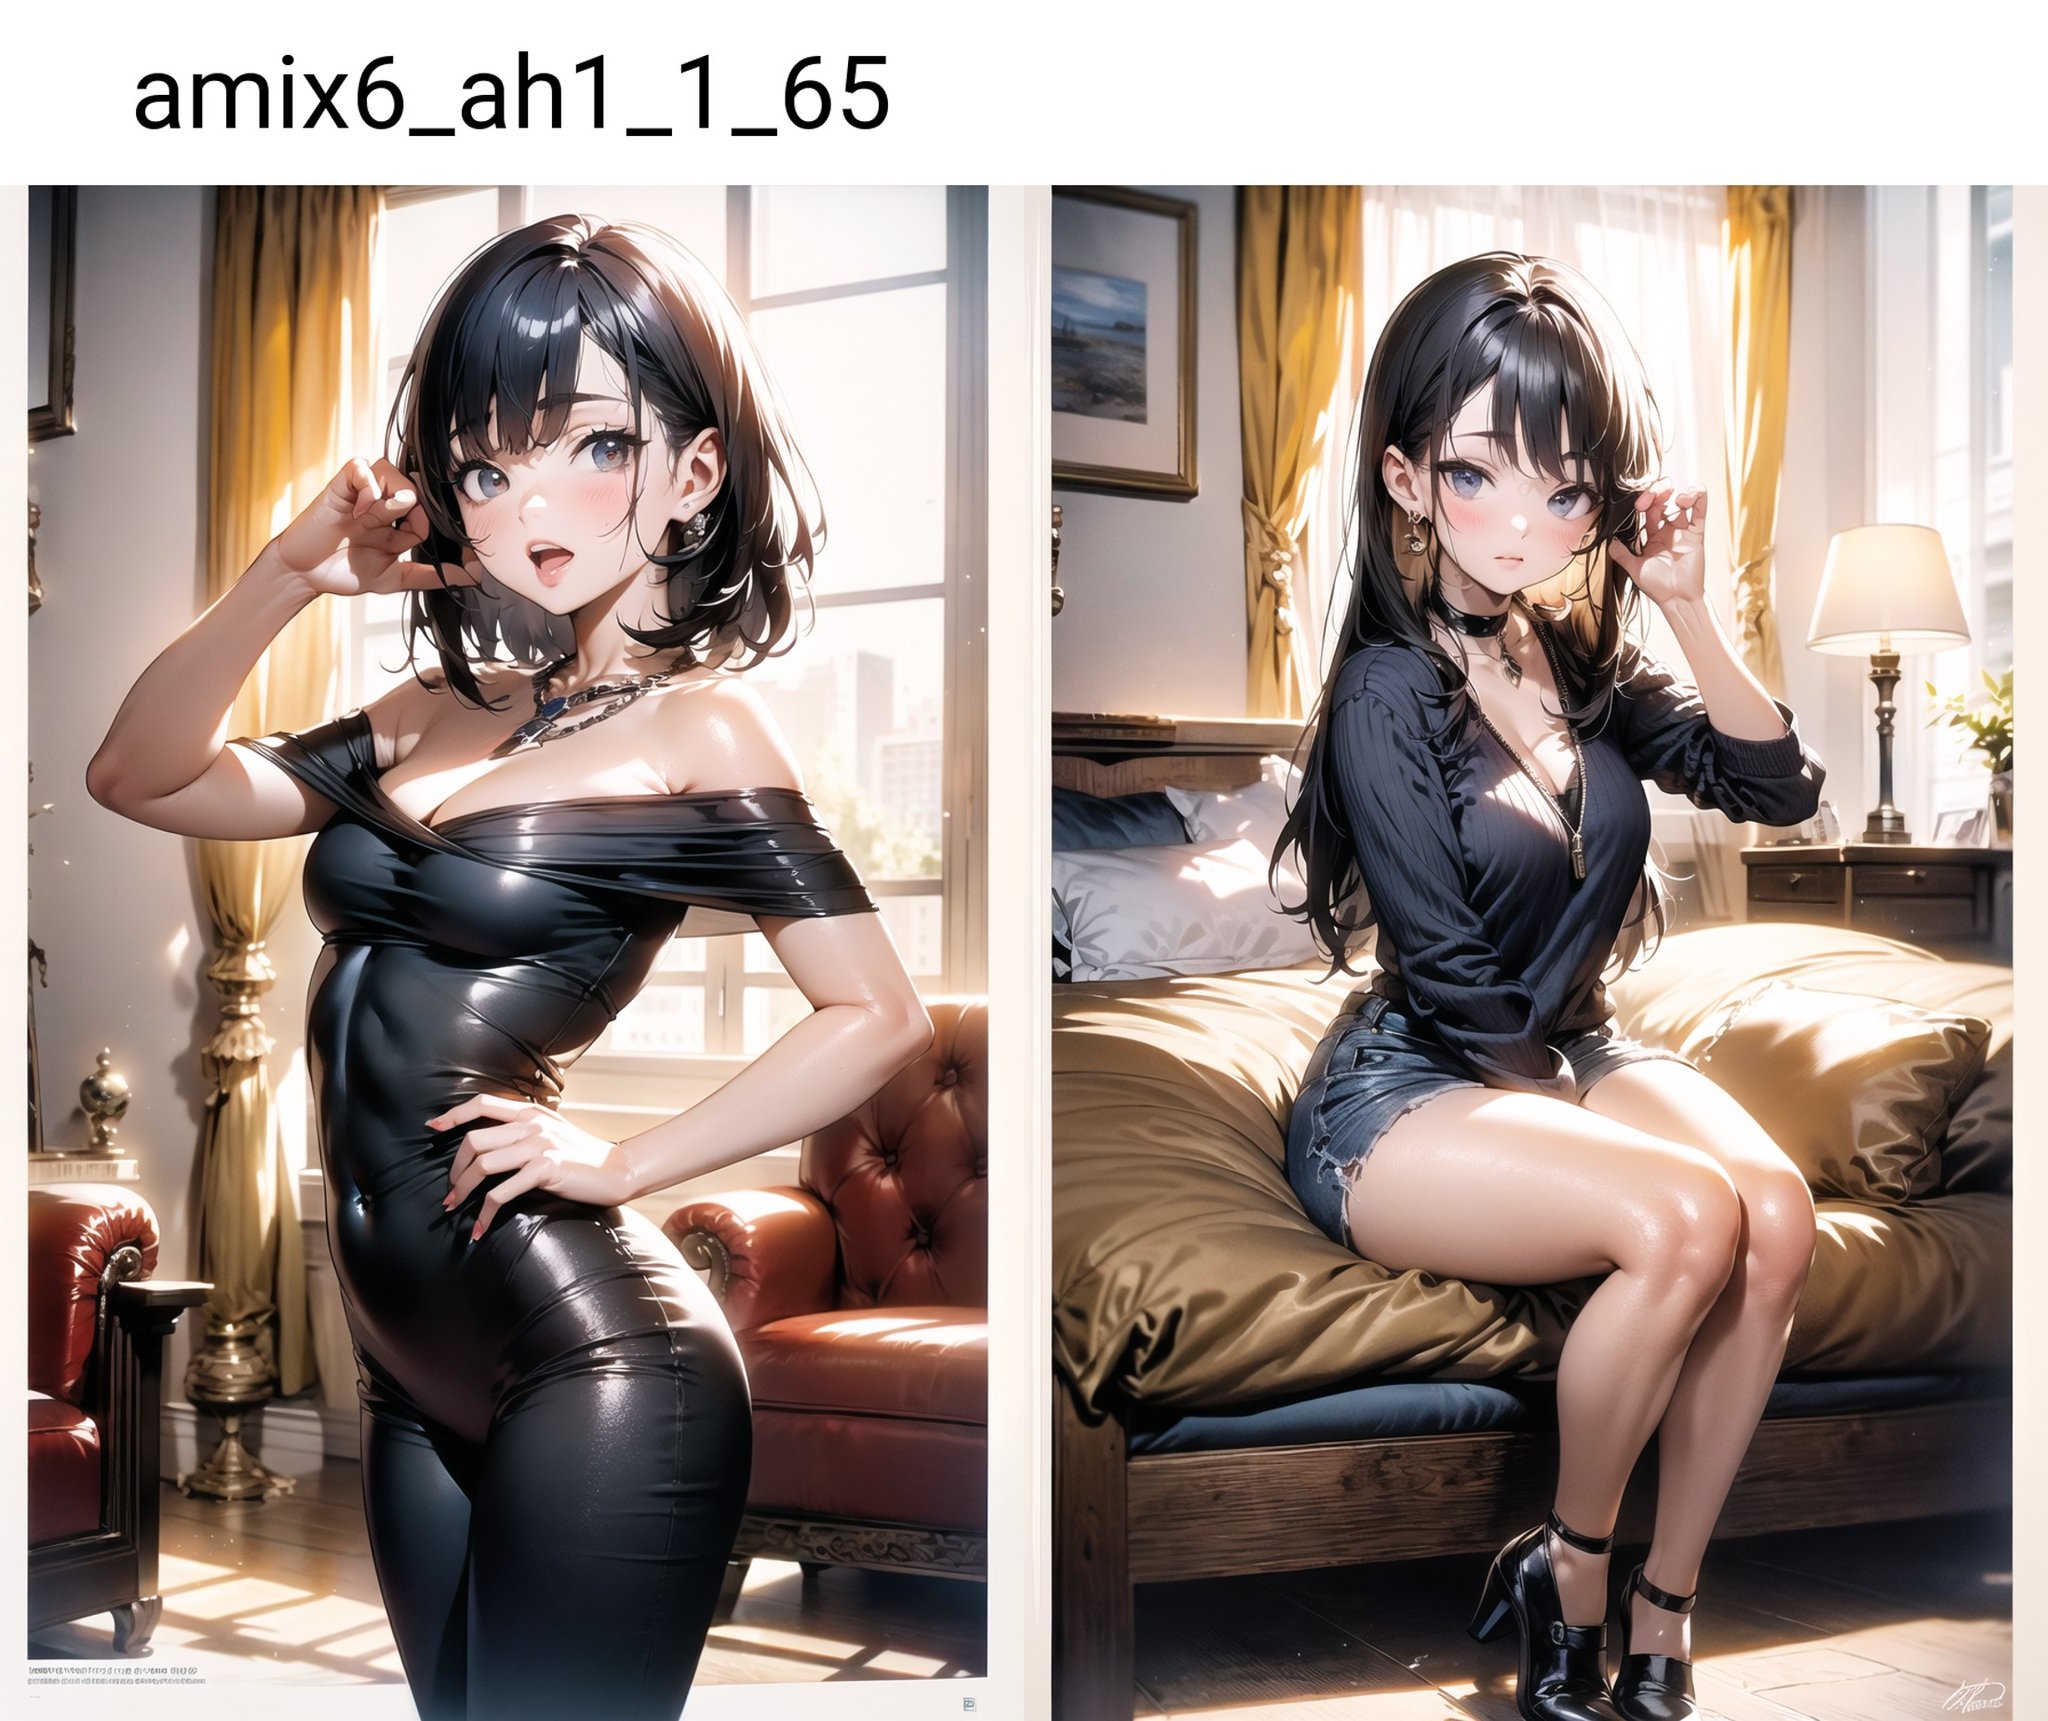 amix6_ah1_1_65masterpiece best quality